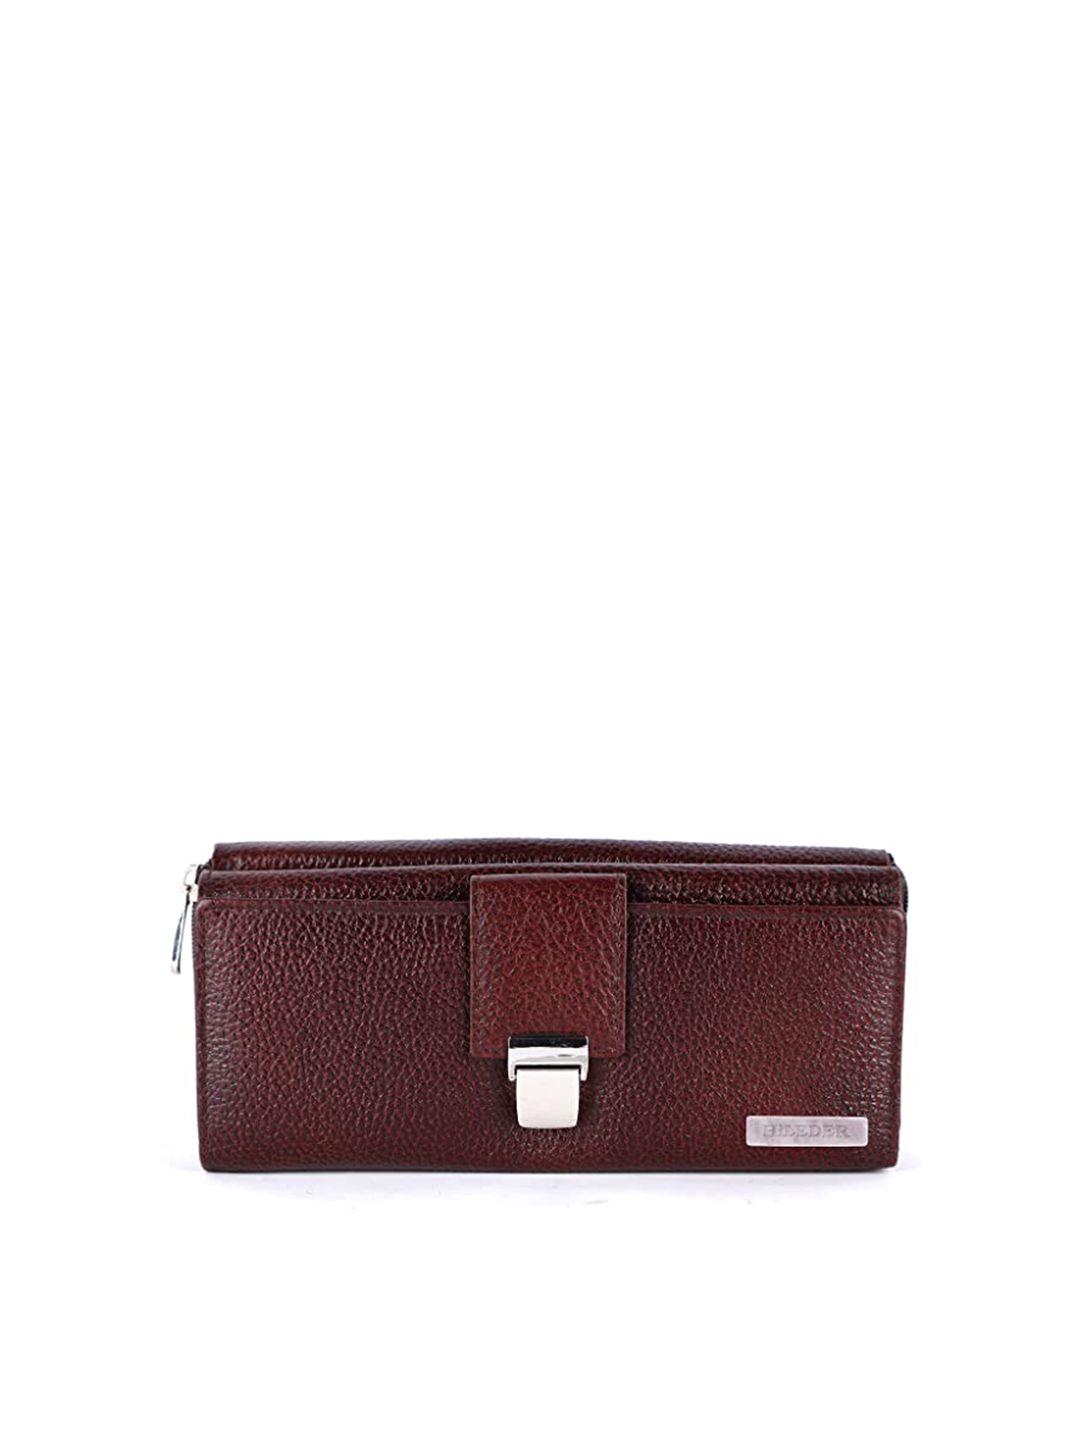 hileder leather textured purse